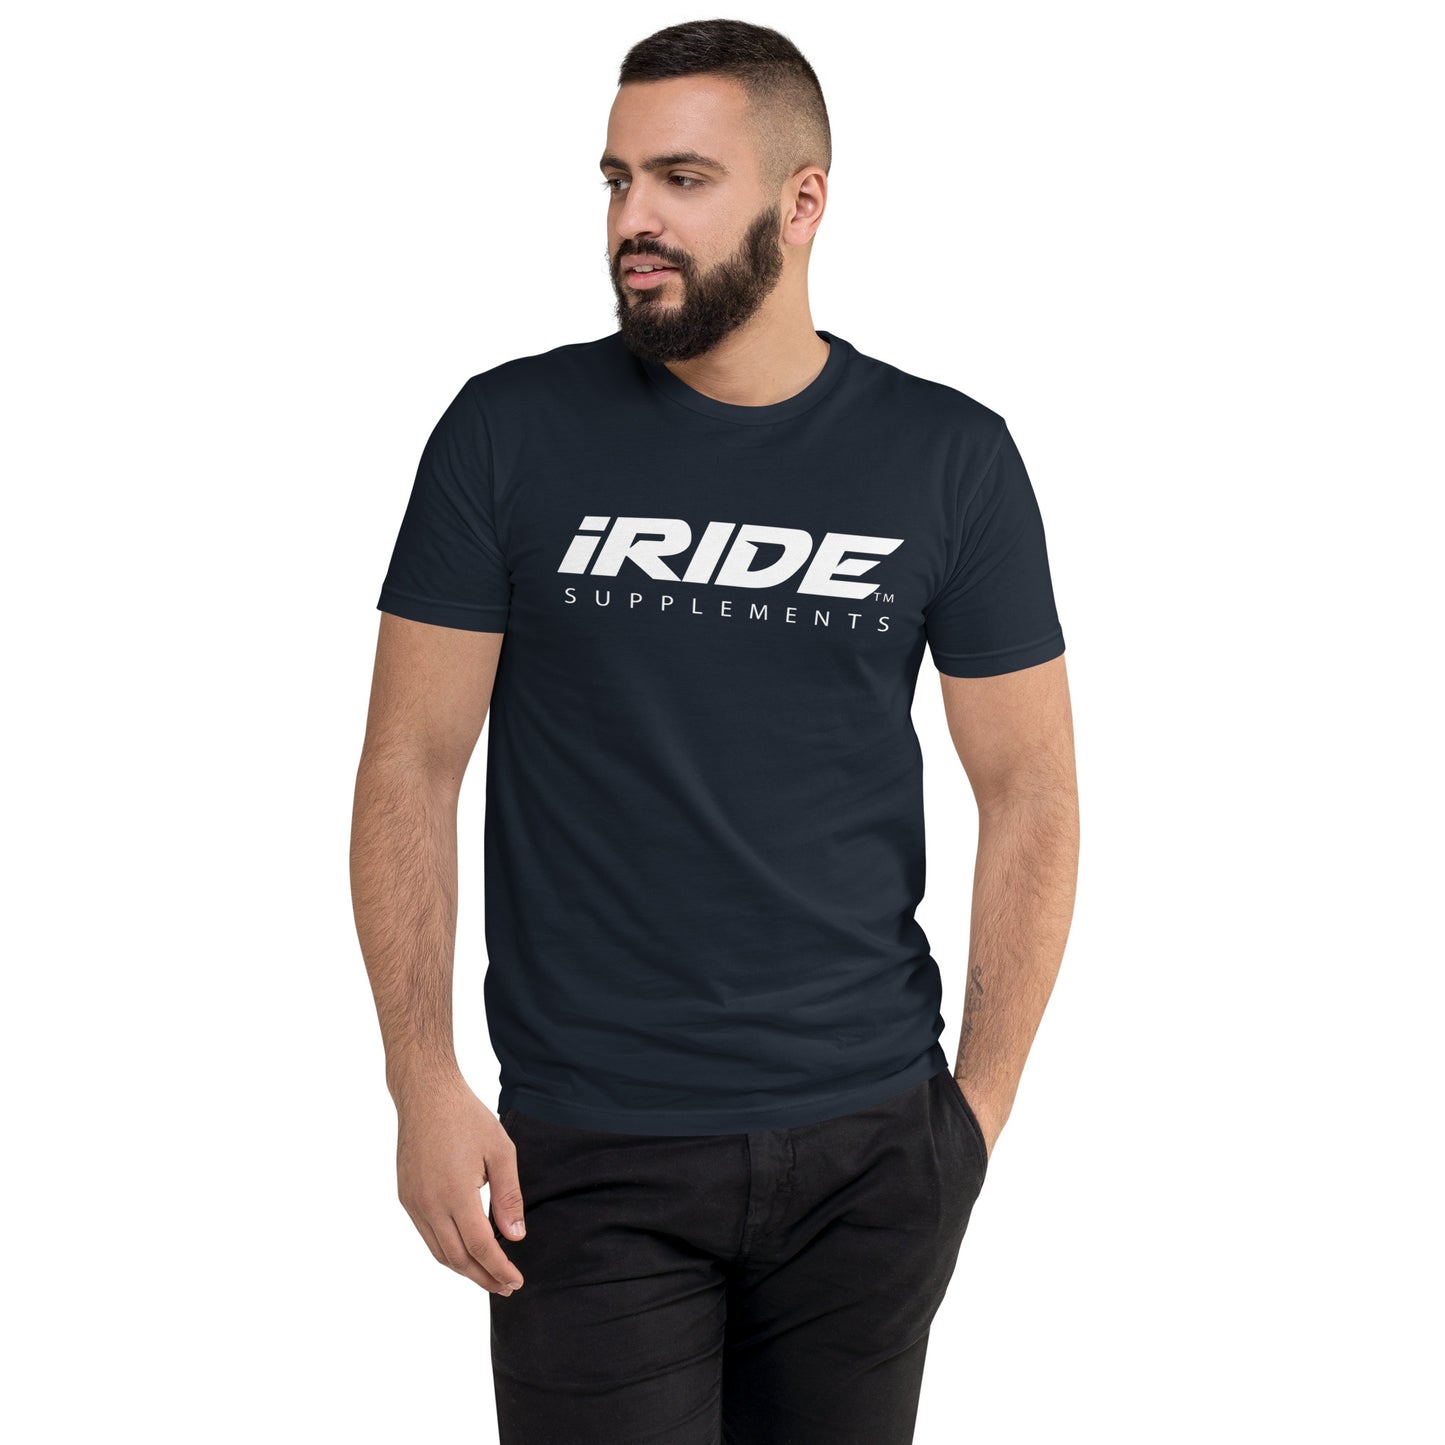 Basic iRide T-shirt